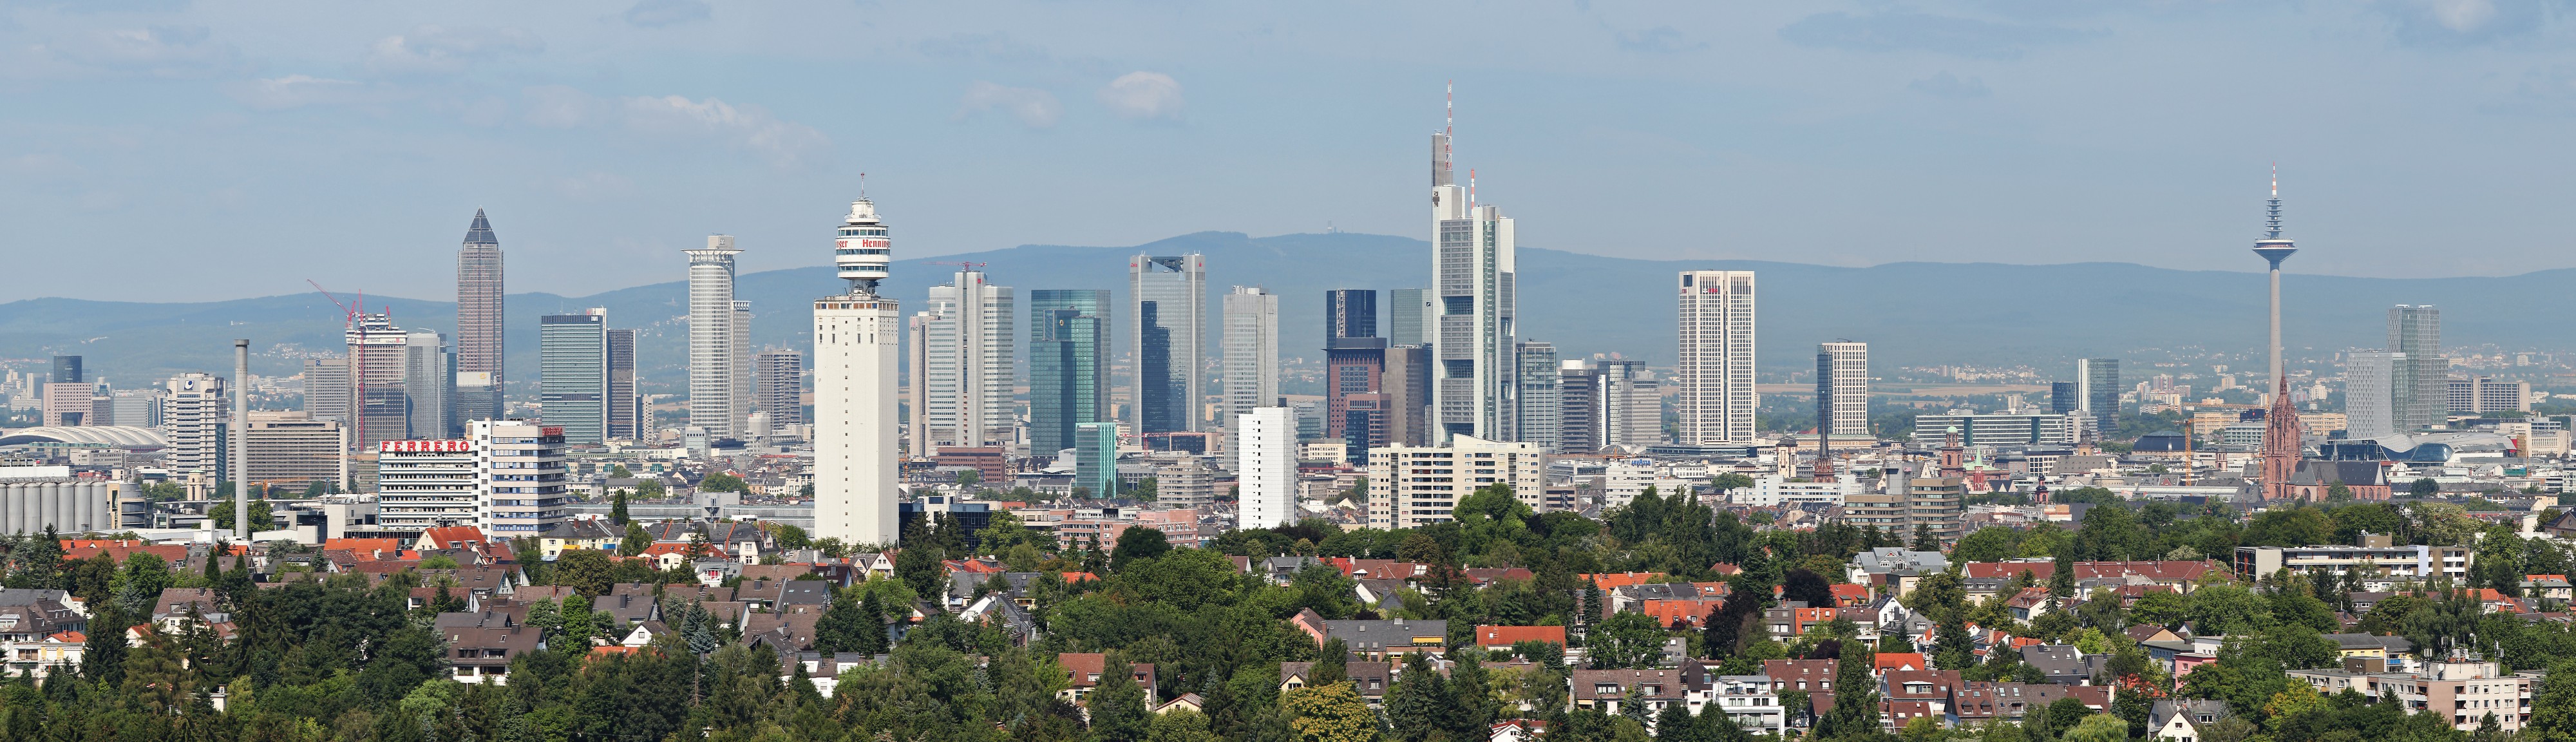 Cityscape Frankfurt 2010